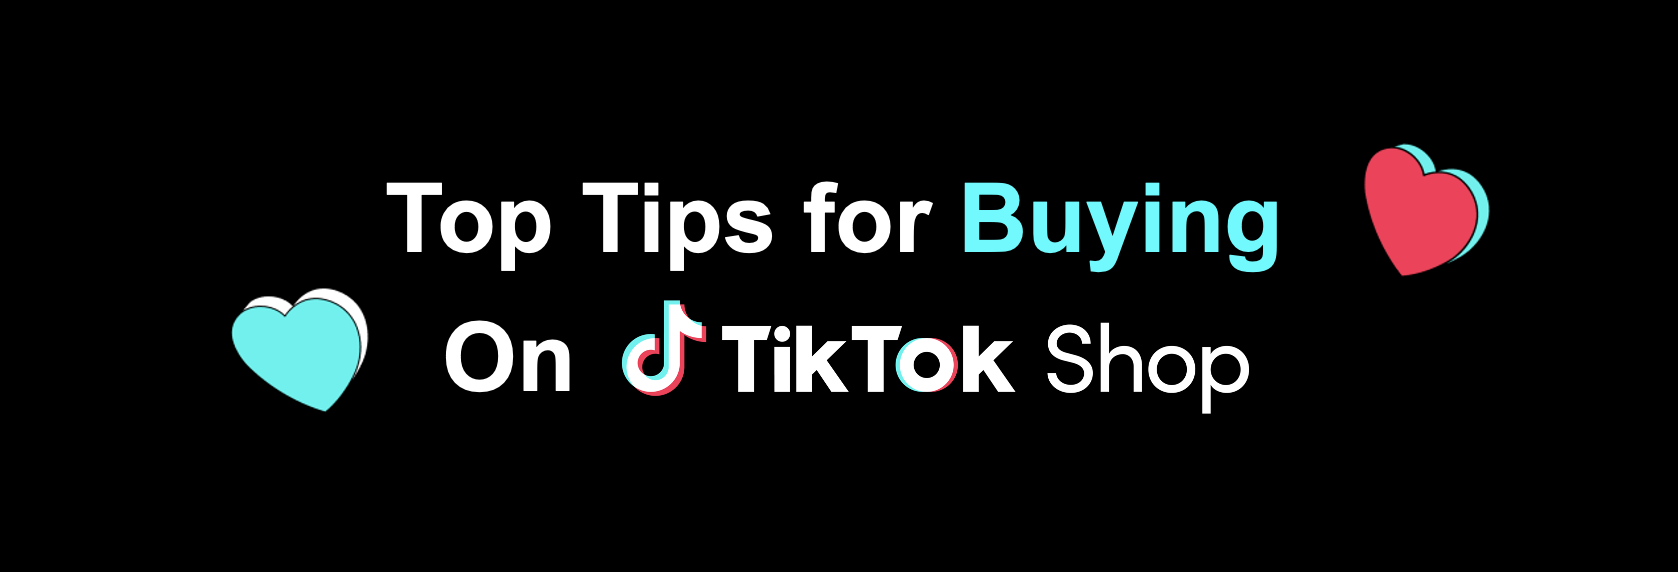 TikTok Shop on LinkedIn: Discover more on TikTok Shop today!